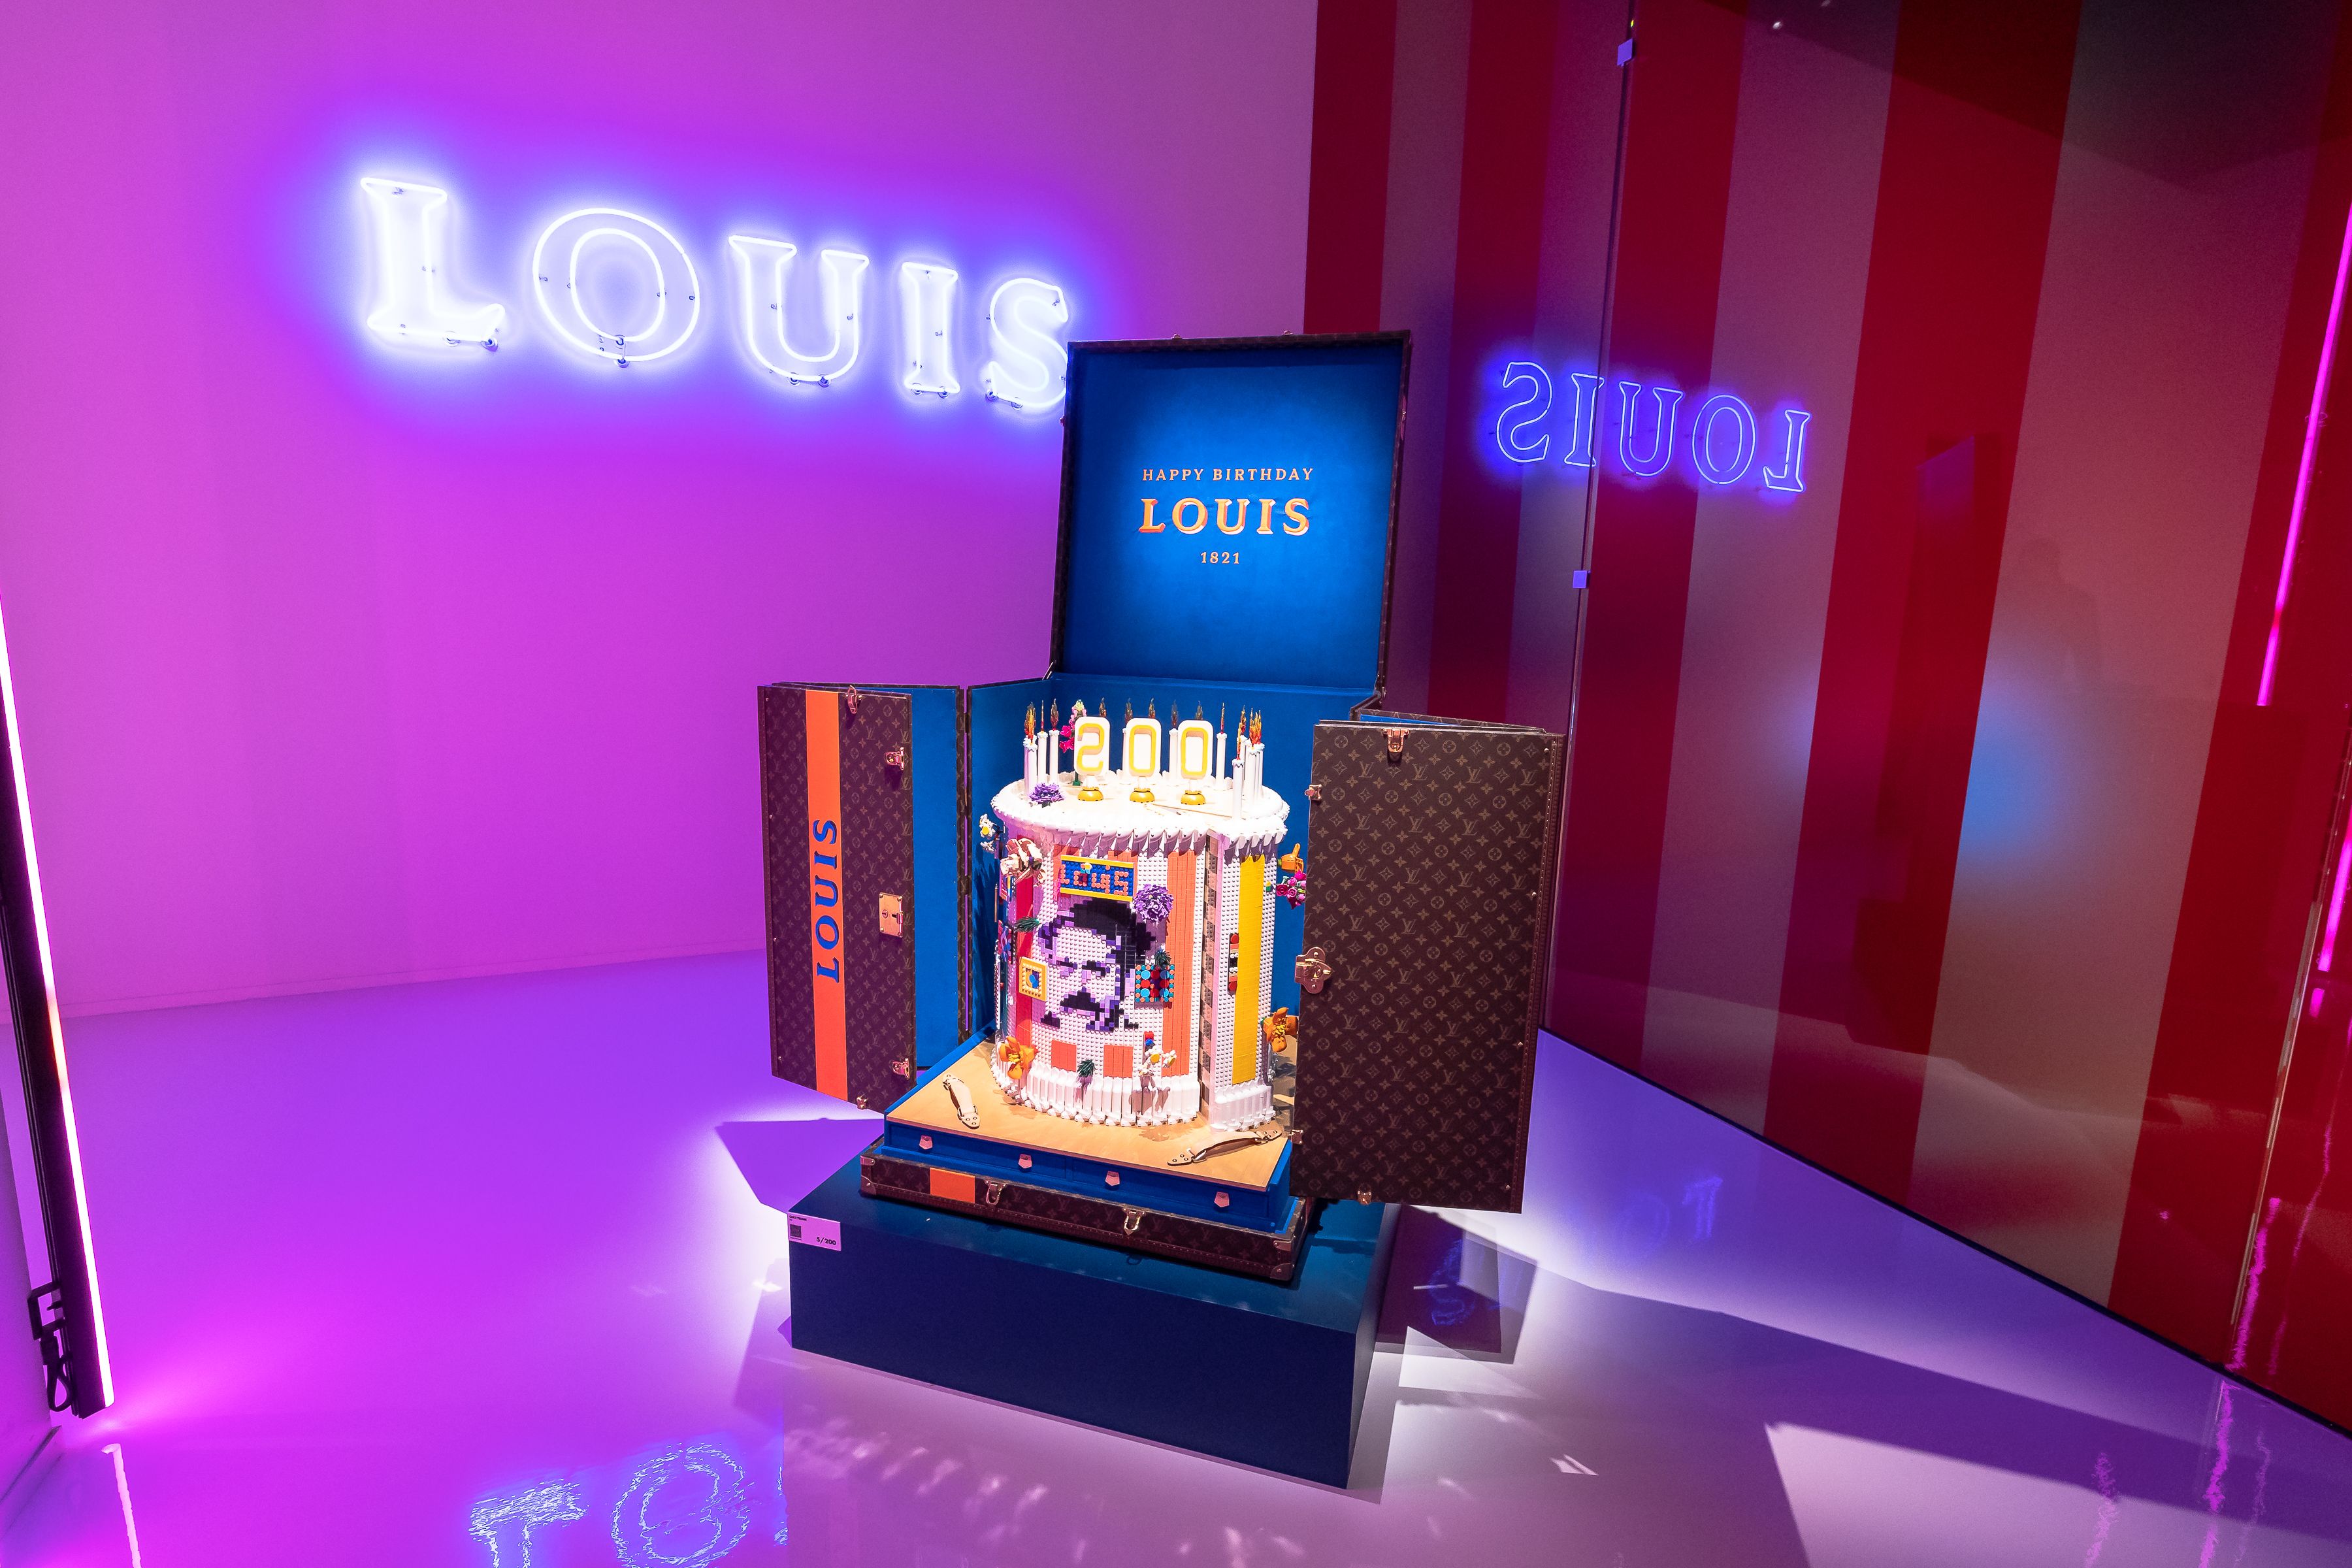 Louis Vuitton 200th anniversary advertisement - Malle2luxe